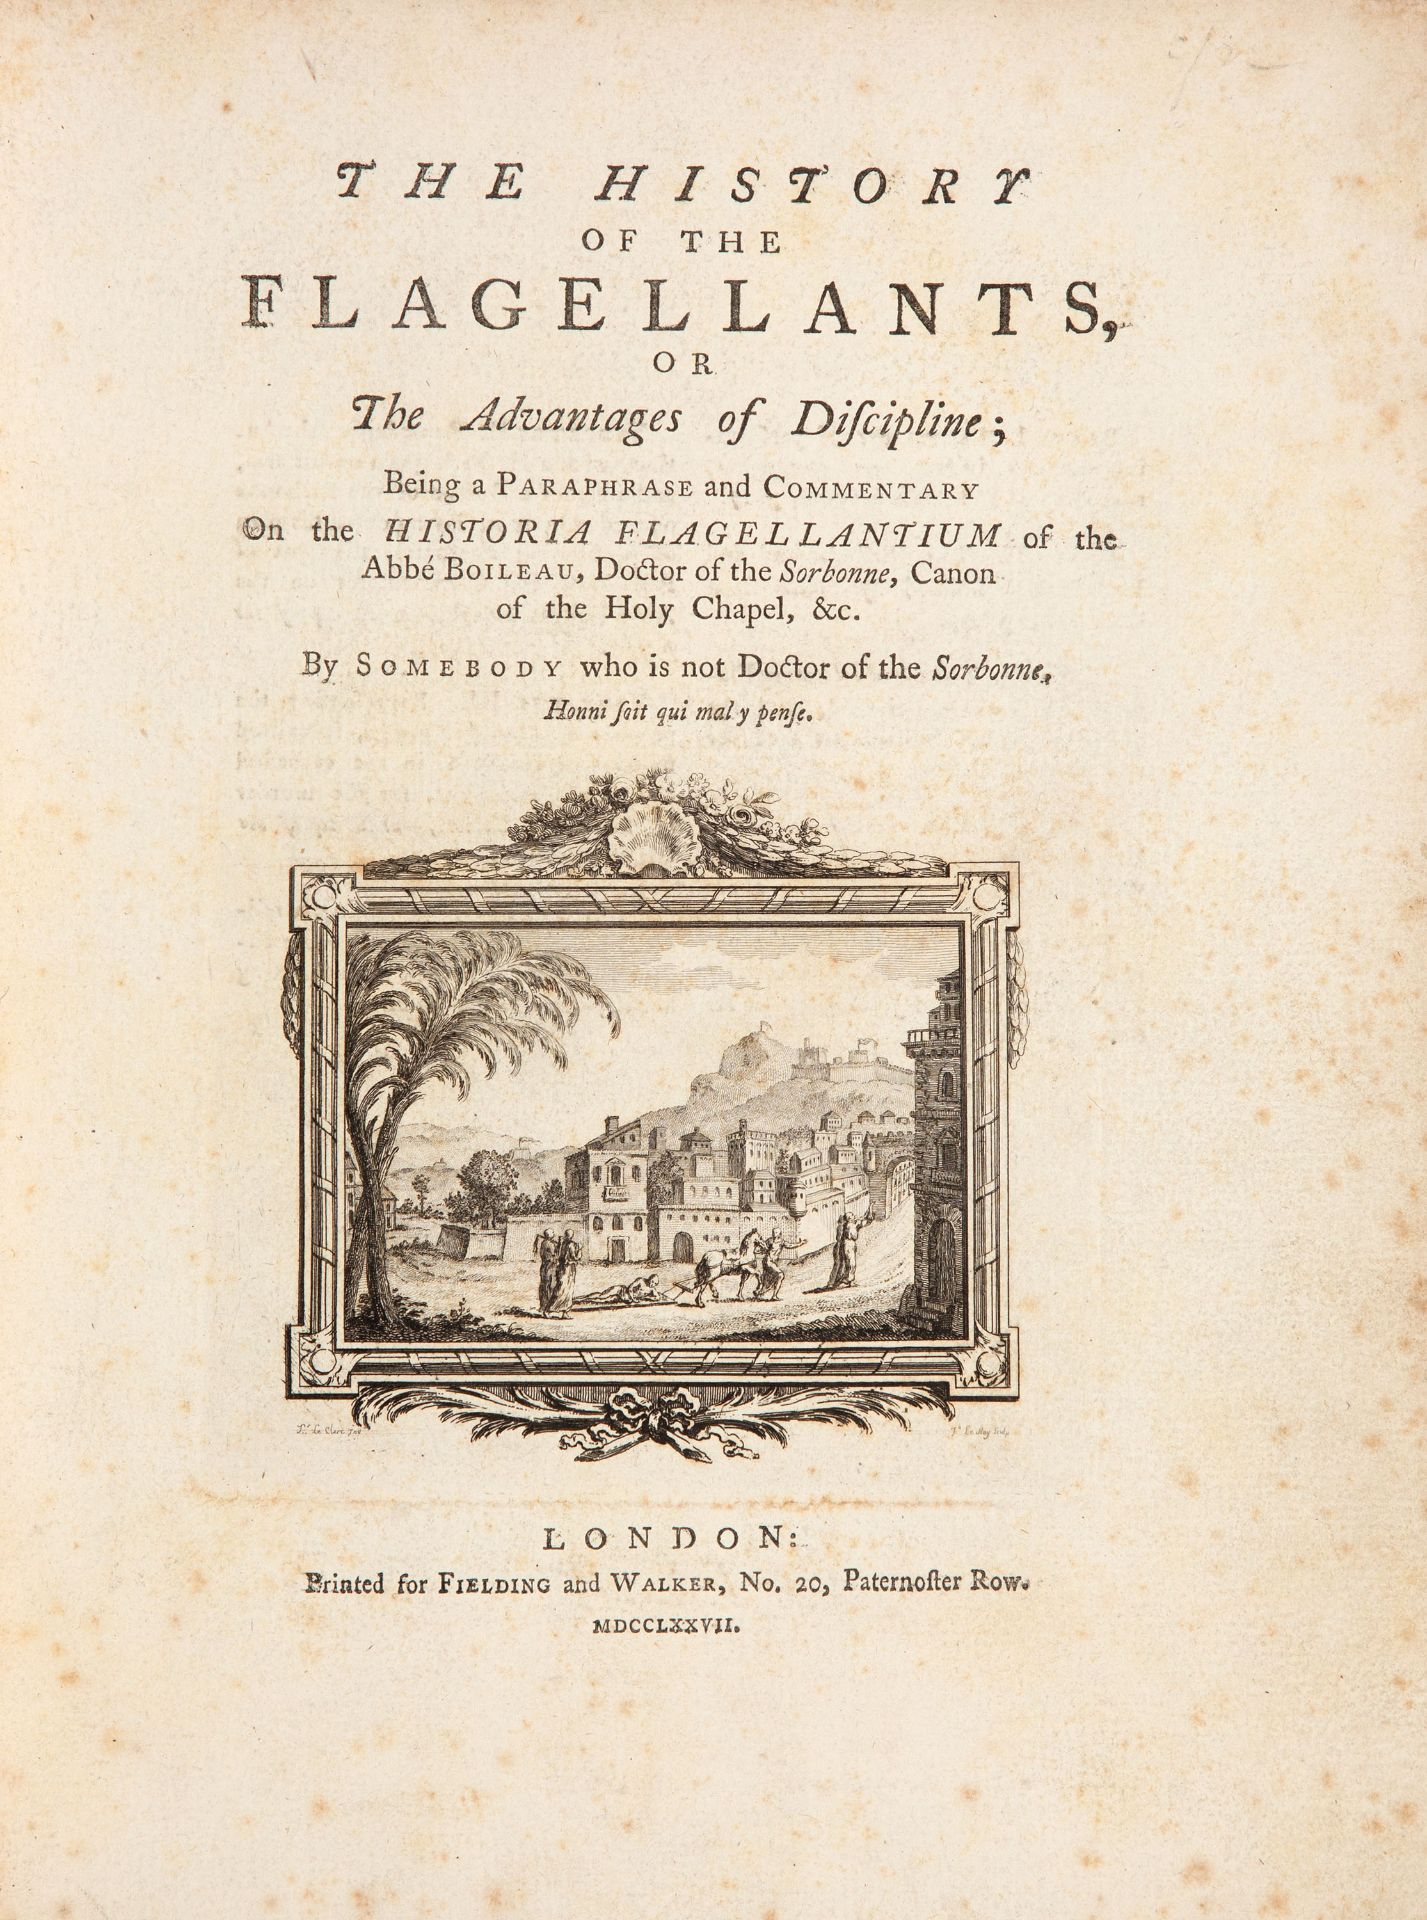 J. L. Delolme nach J. Boileau, The History of the flagellants. Ldn 1777.